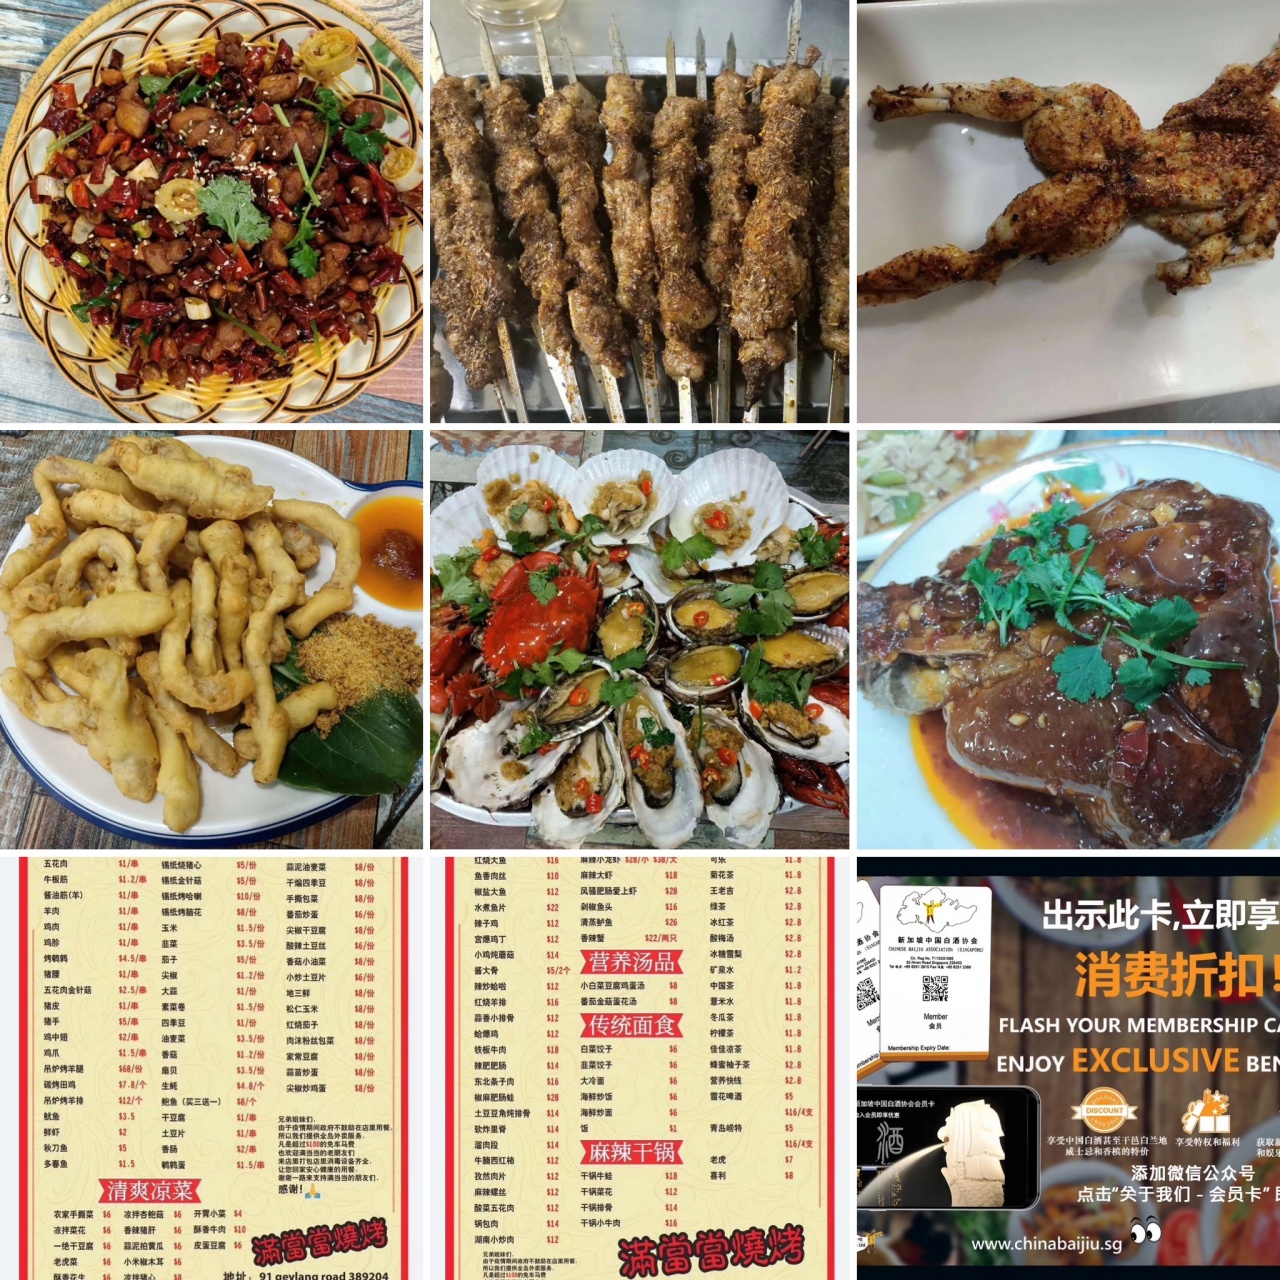 13042020 - Food Collage.jpg